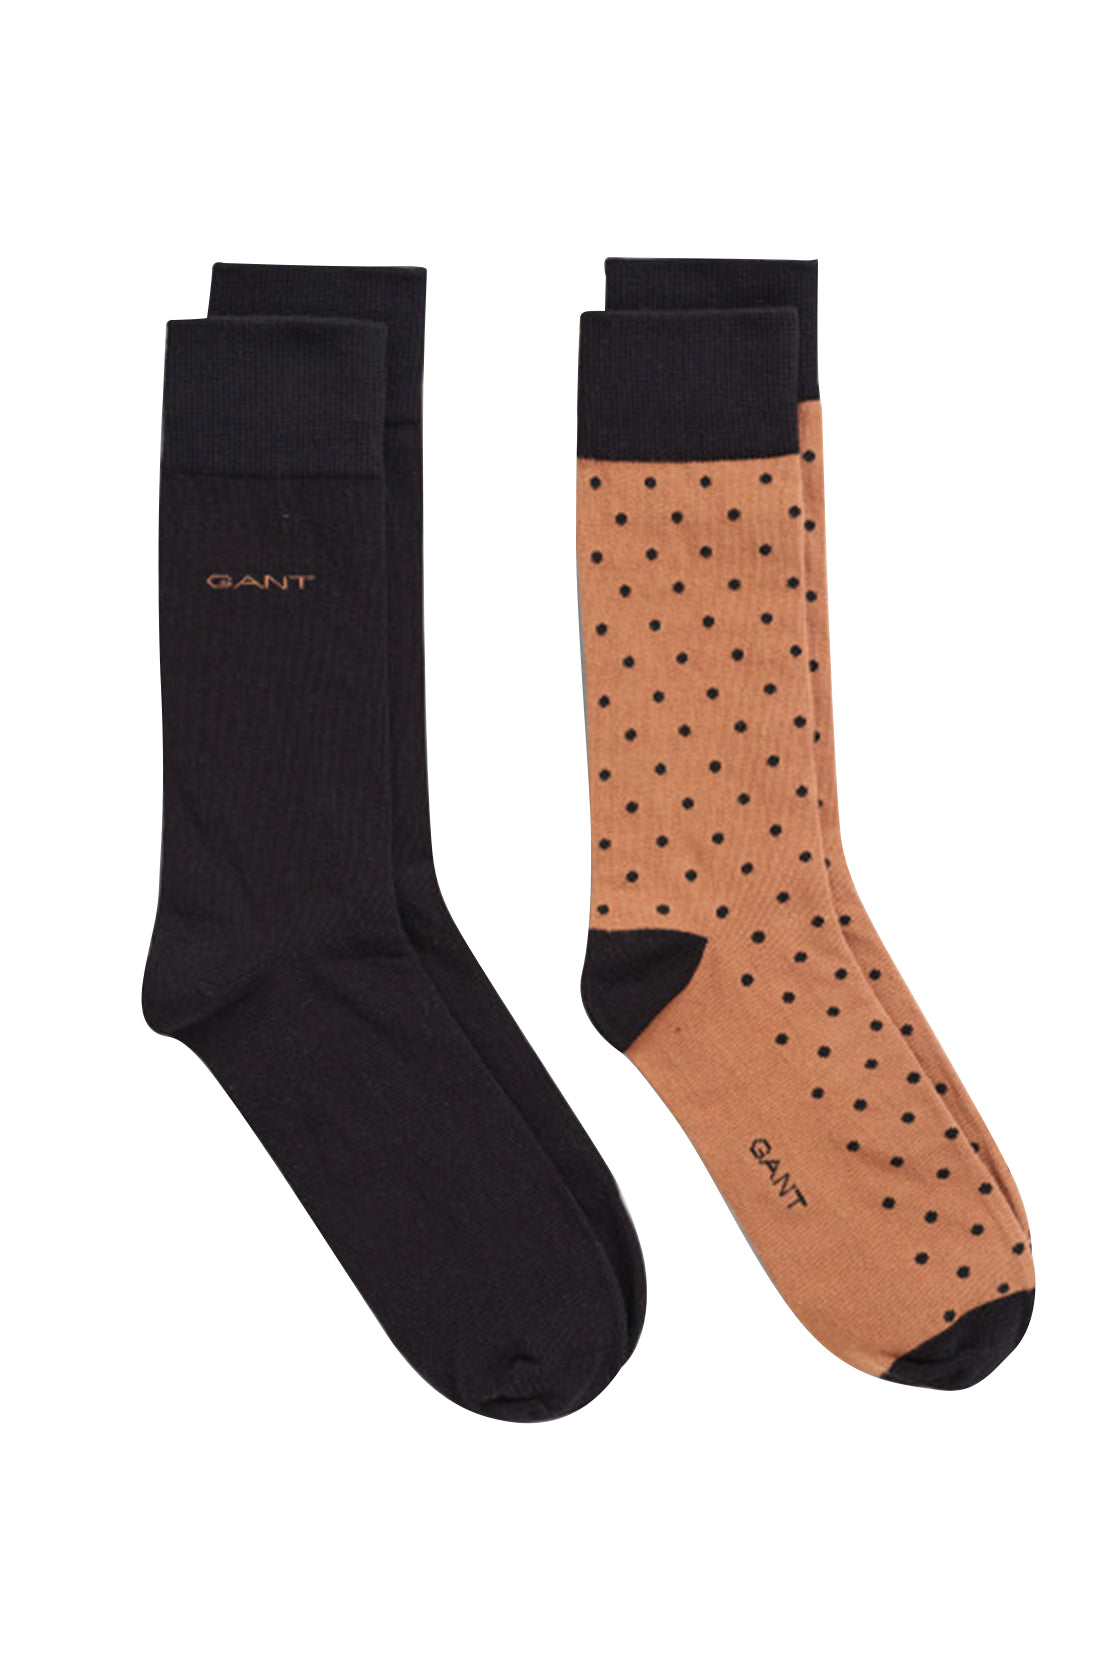 Gant Solid & Dot Socks 2PK Roasted Walnut